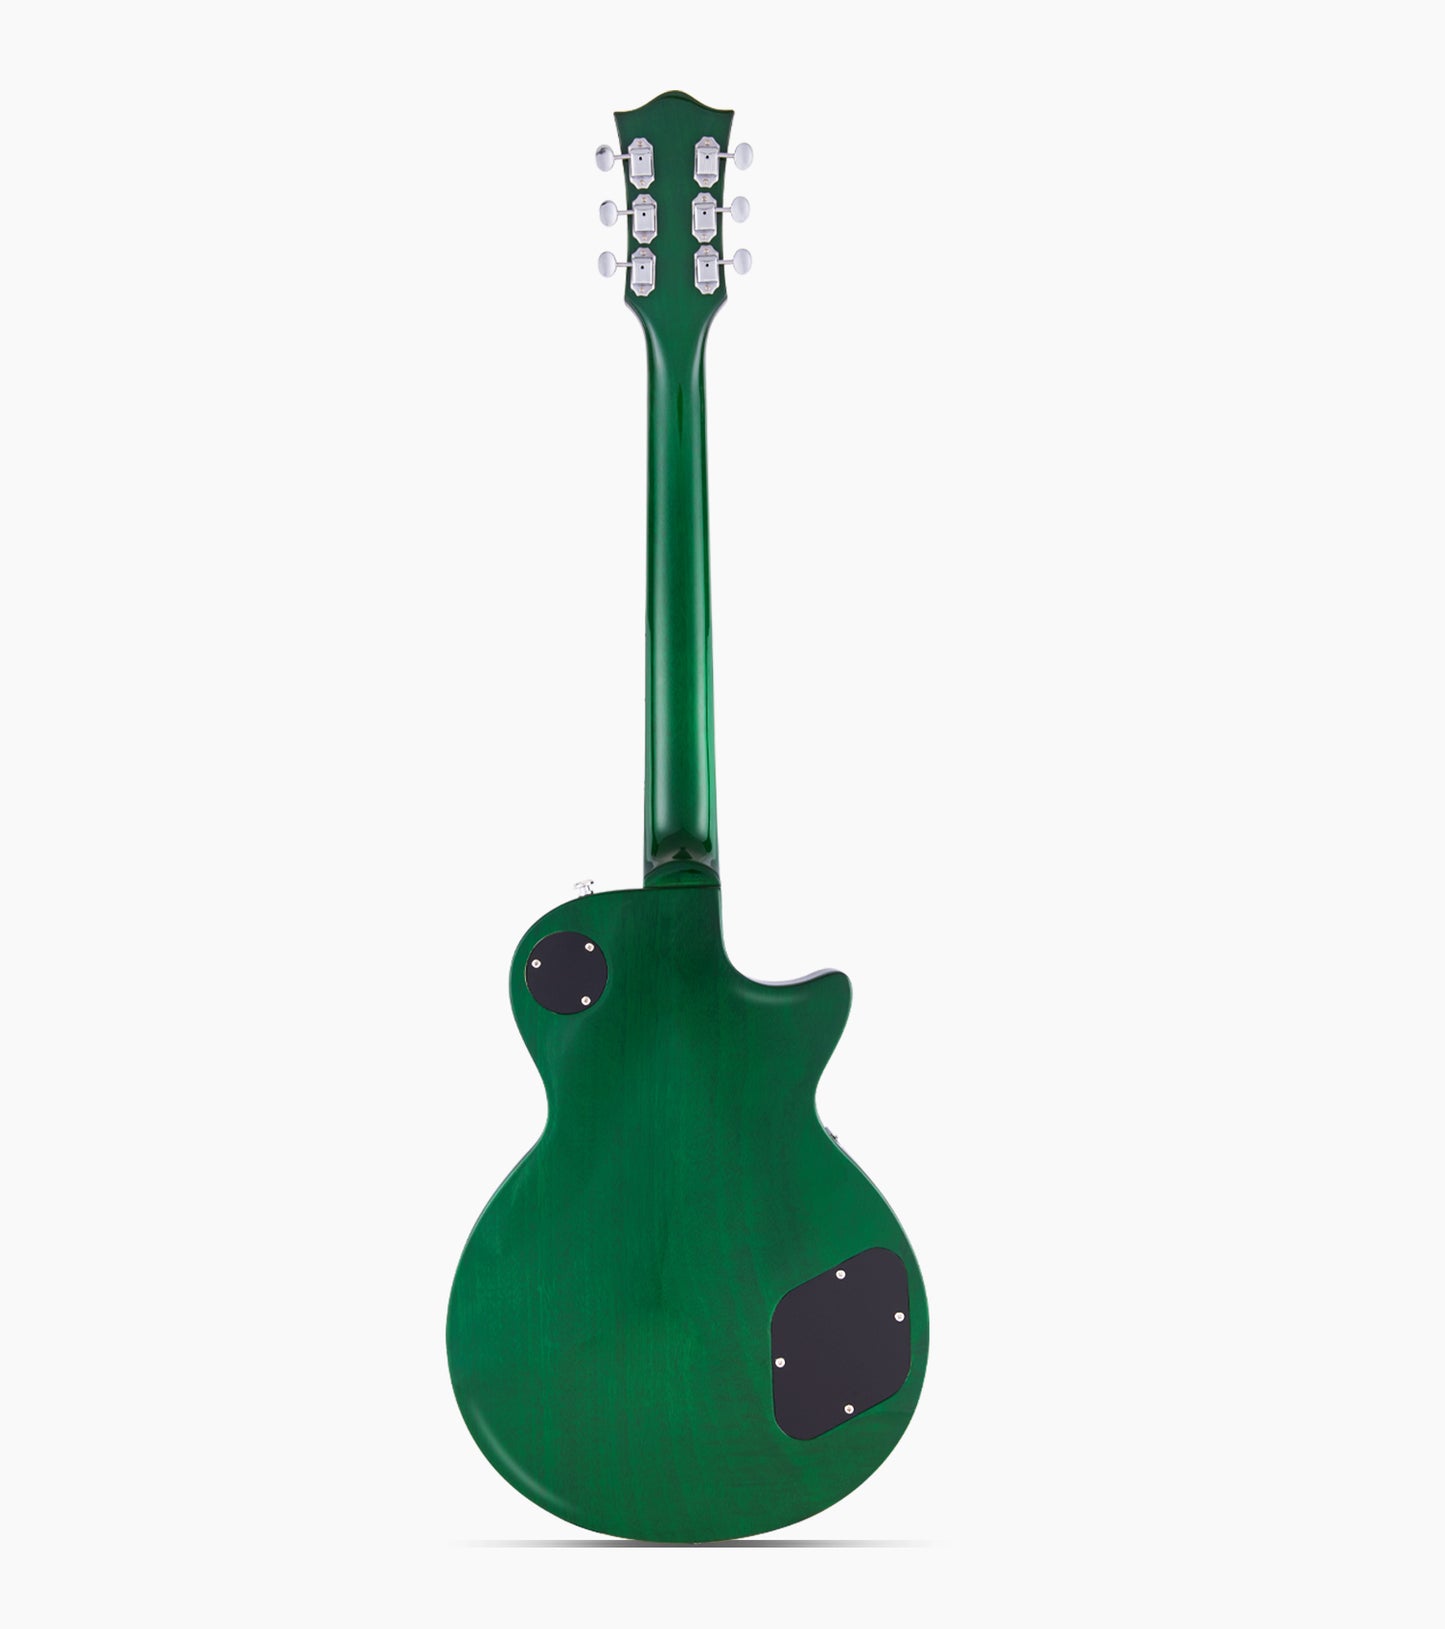 39 inch Les Paul Electric Guitar Green - Back